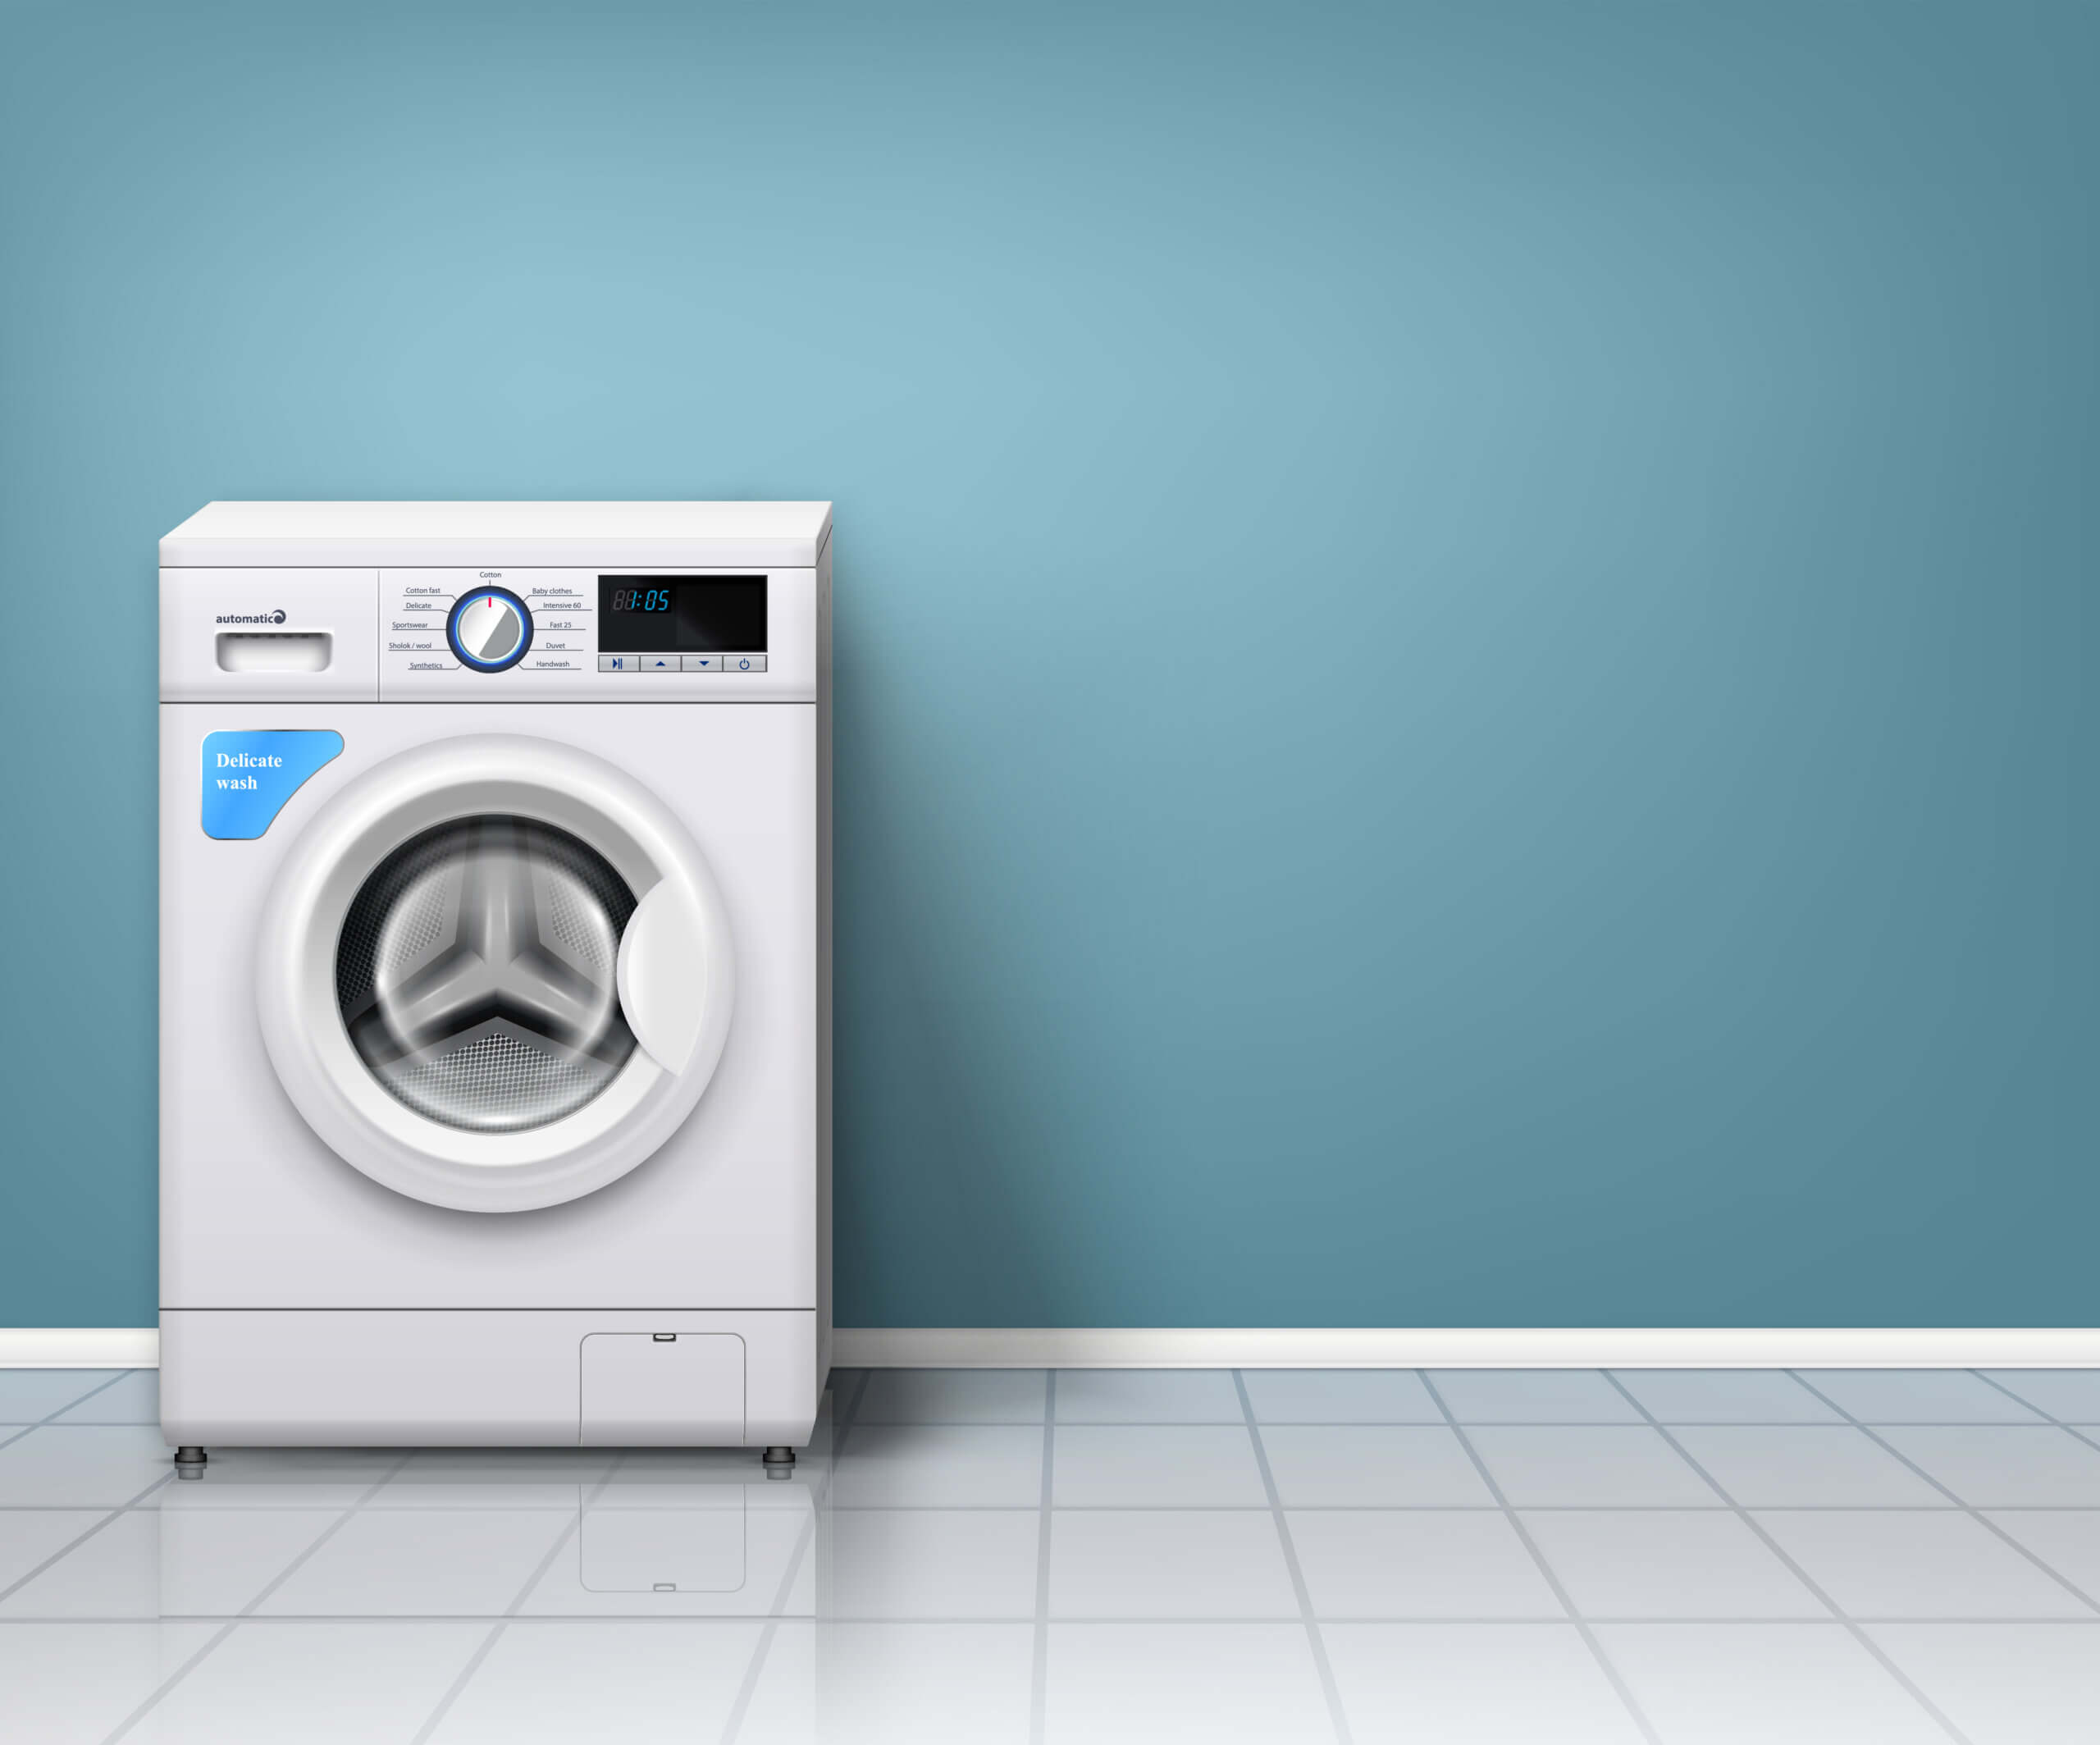 Benefits of front loading washing machine